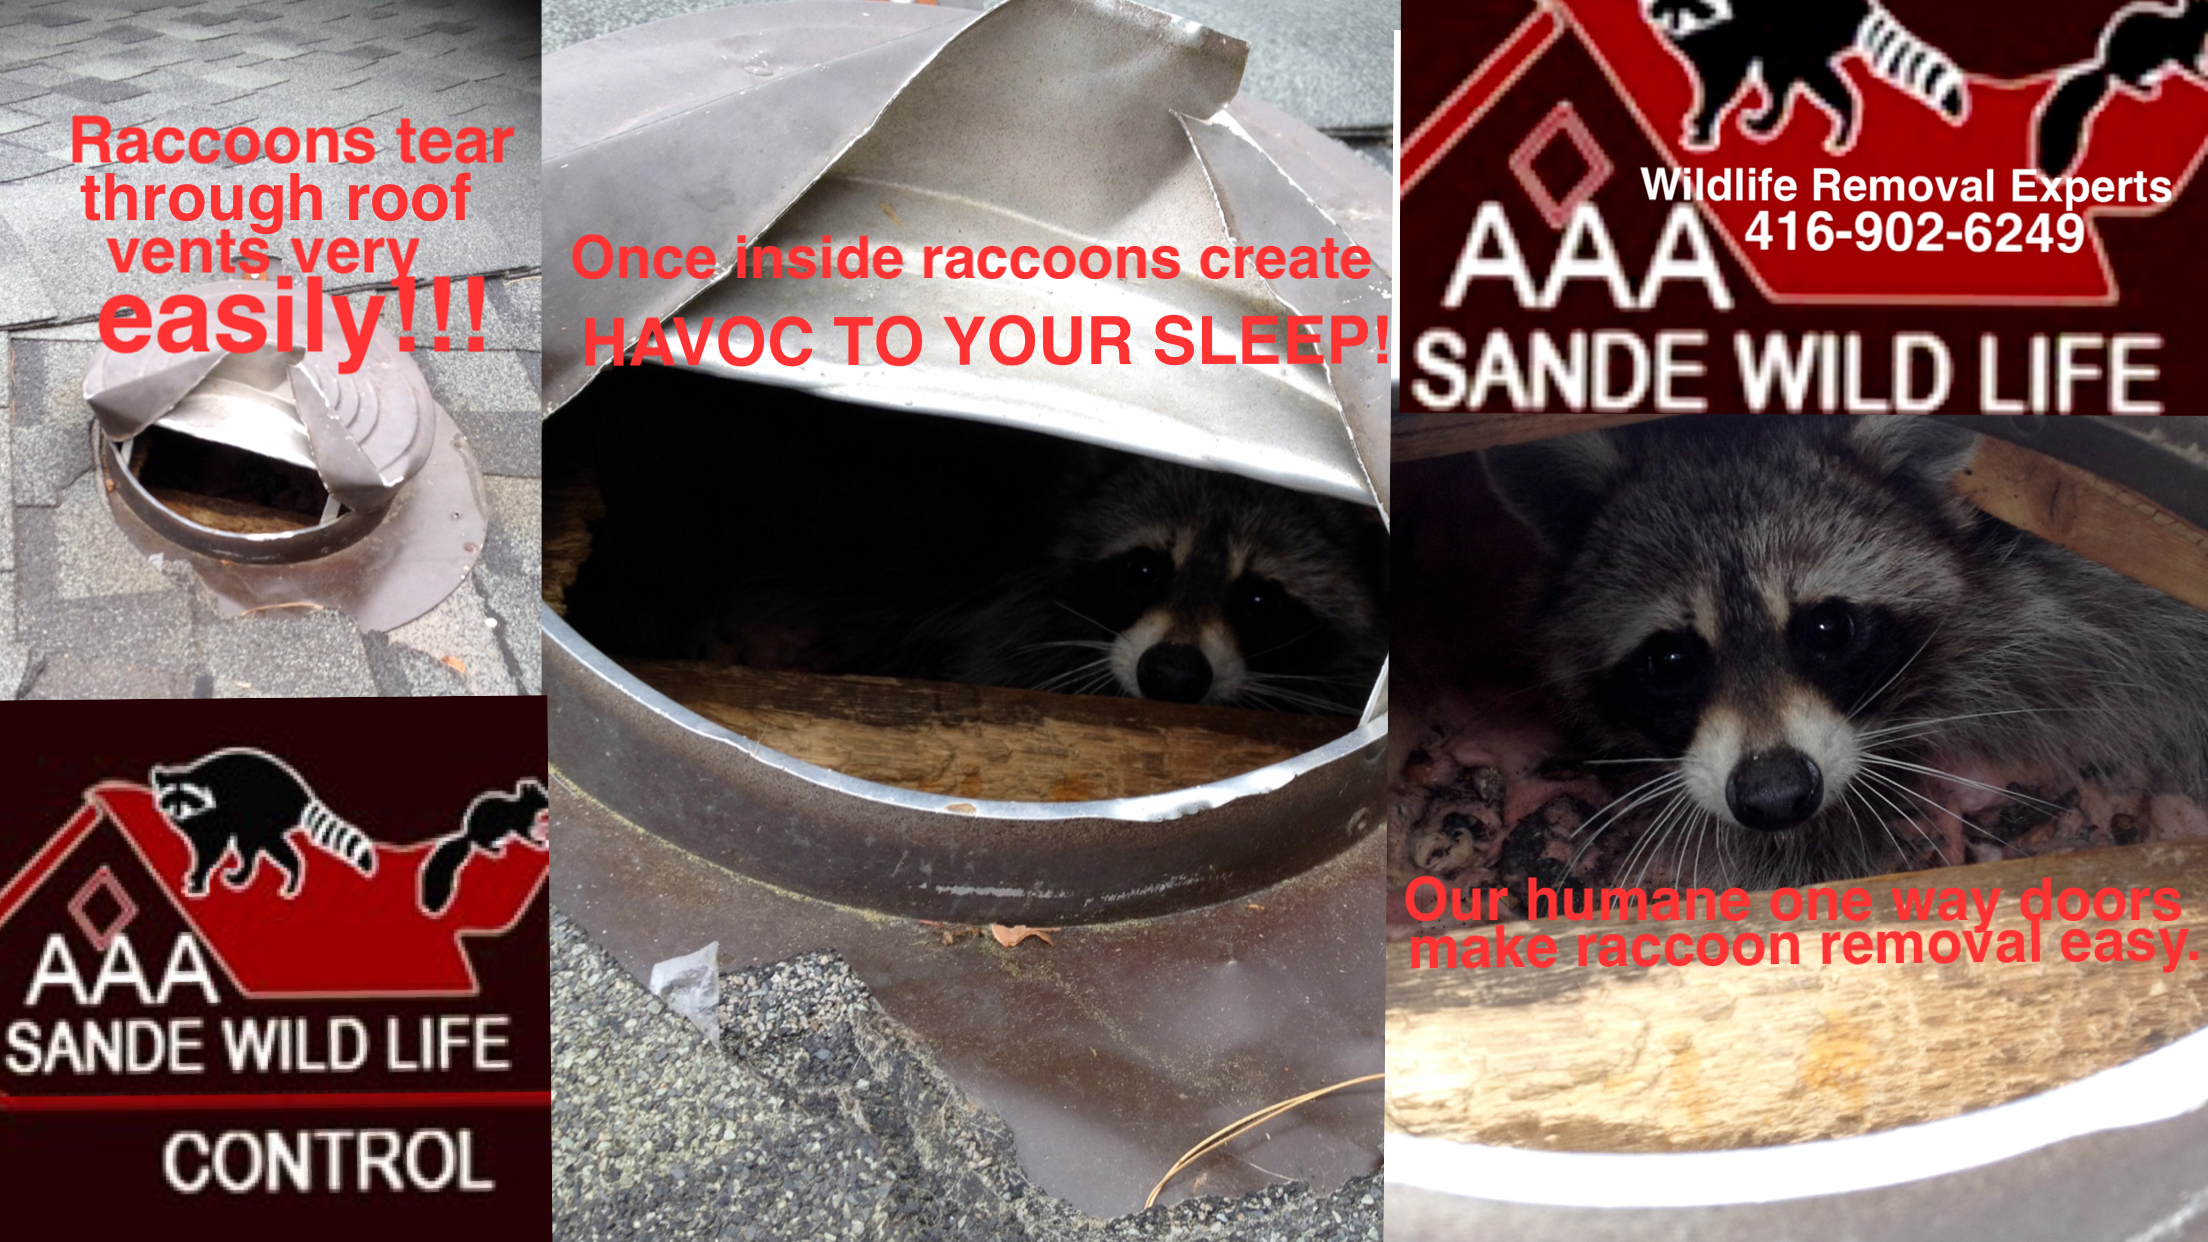 Raccoon Removal Professionals-Sande Wildlife Control